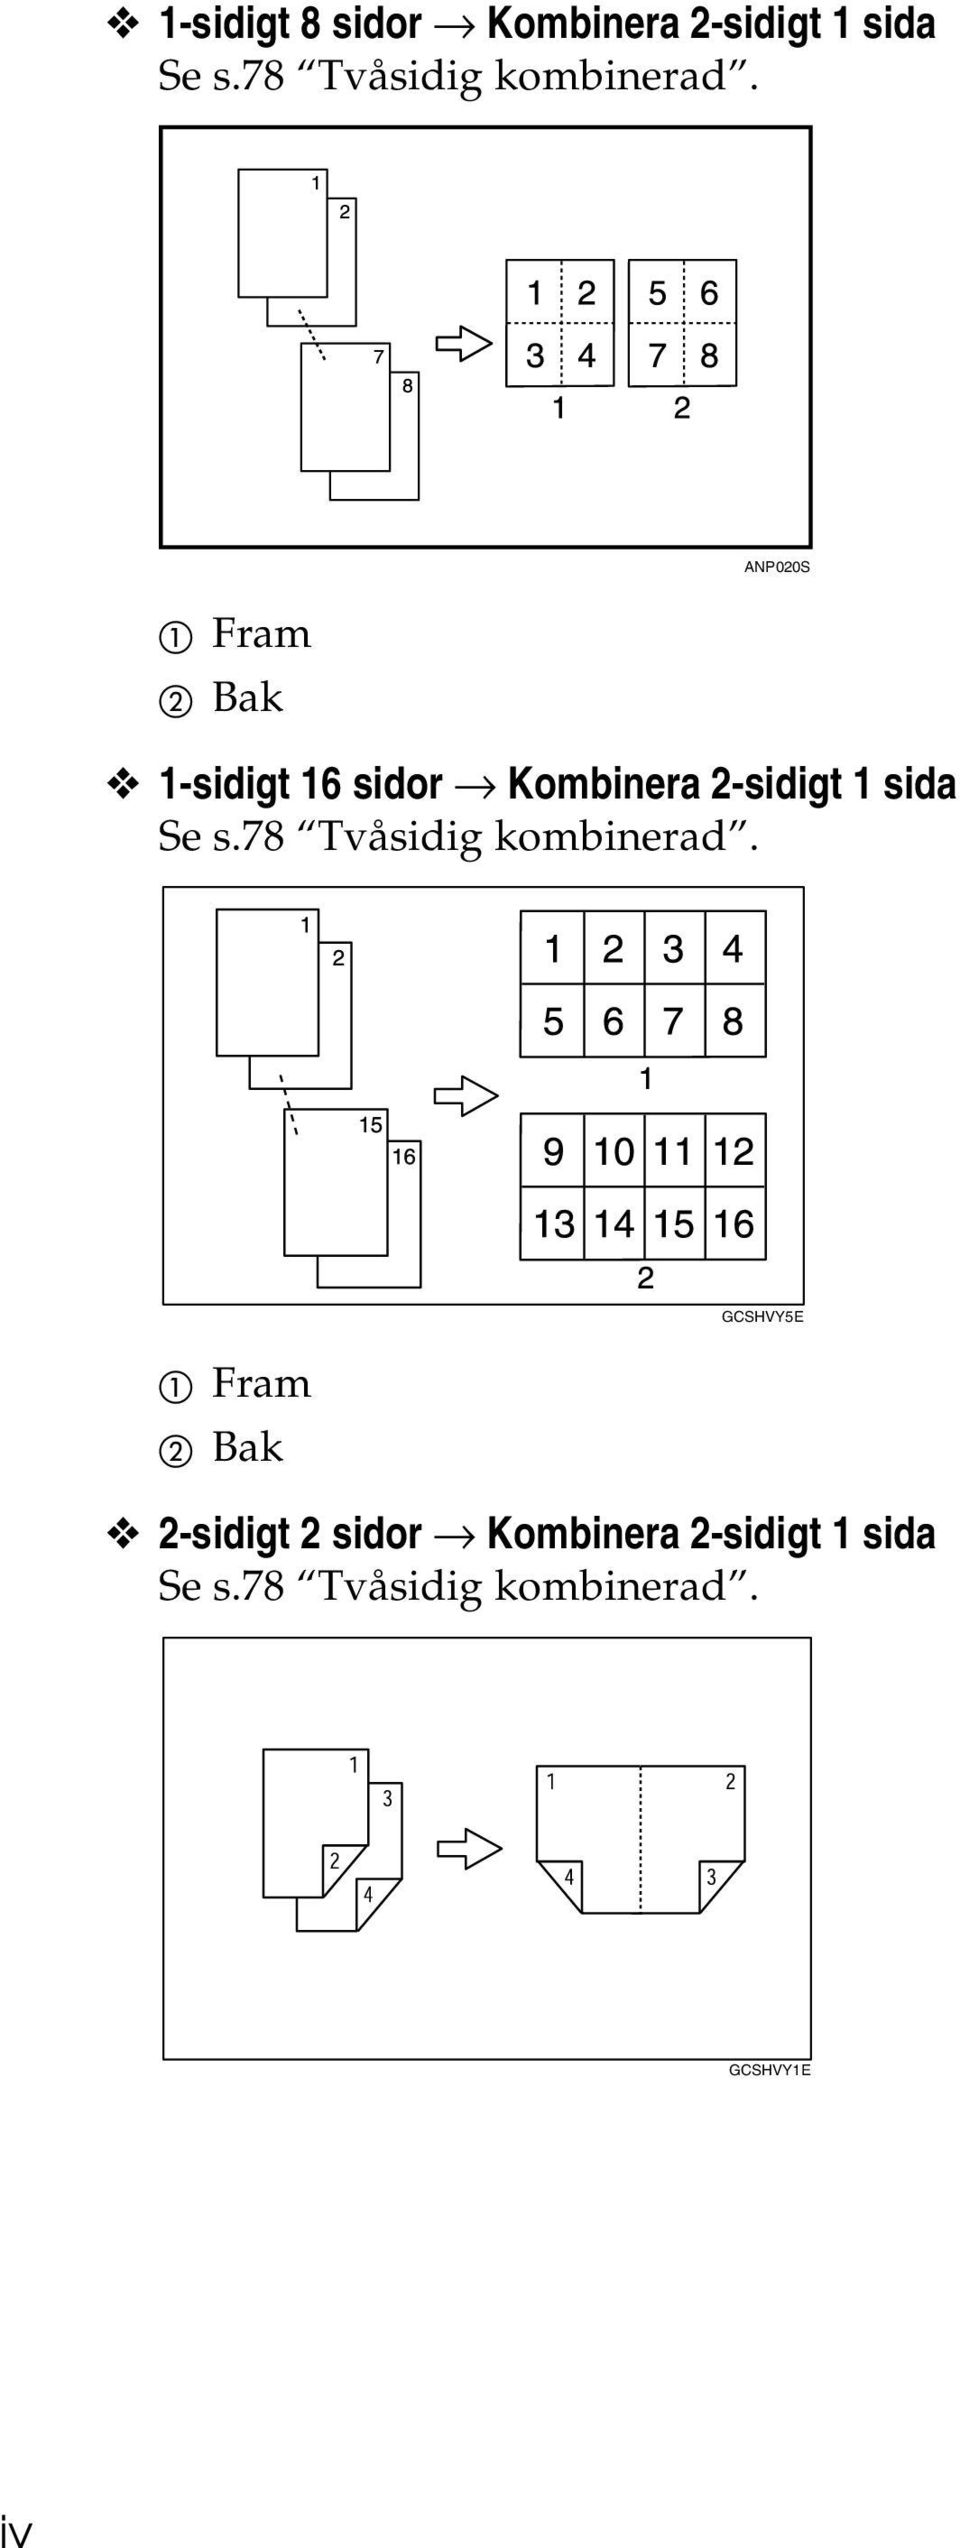 A Fram B Bak ANP00S 1-sidigt 16 sidor Kombinera -sidigt 1 sida Se